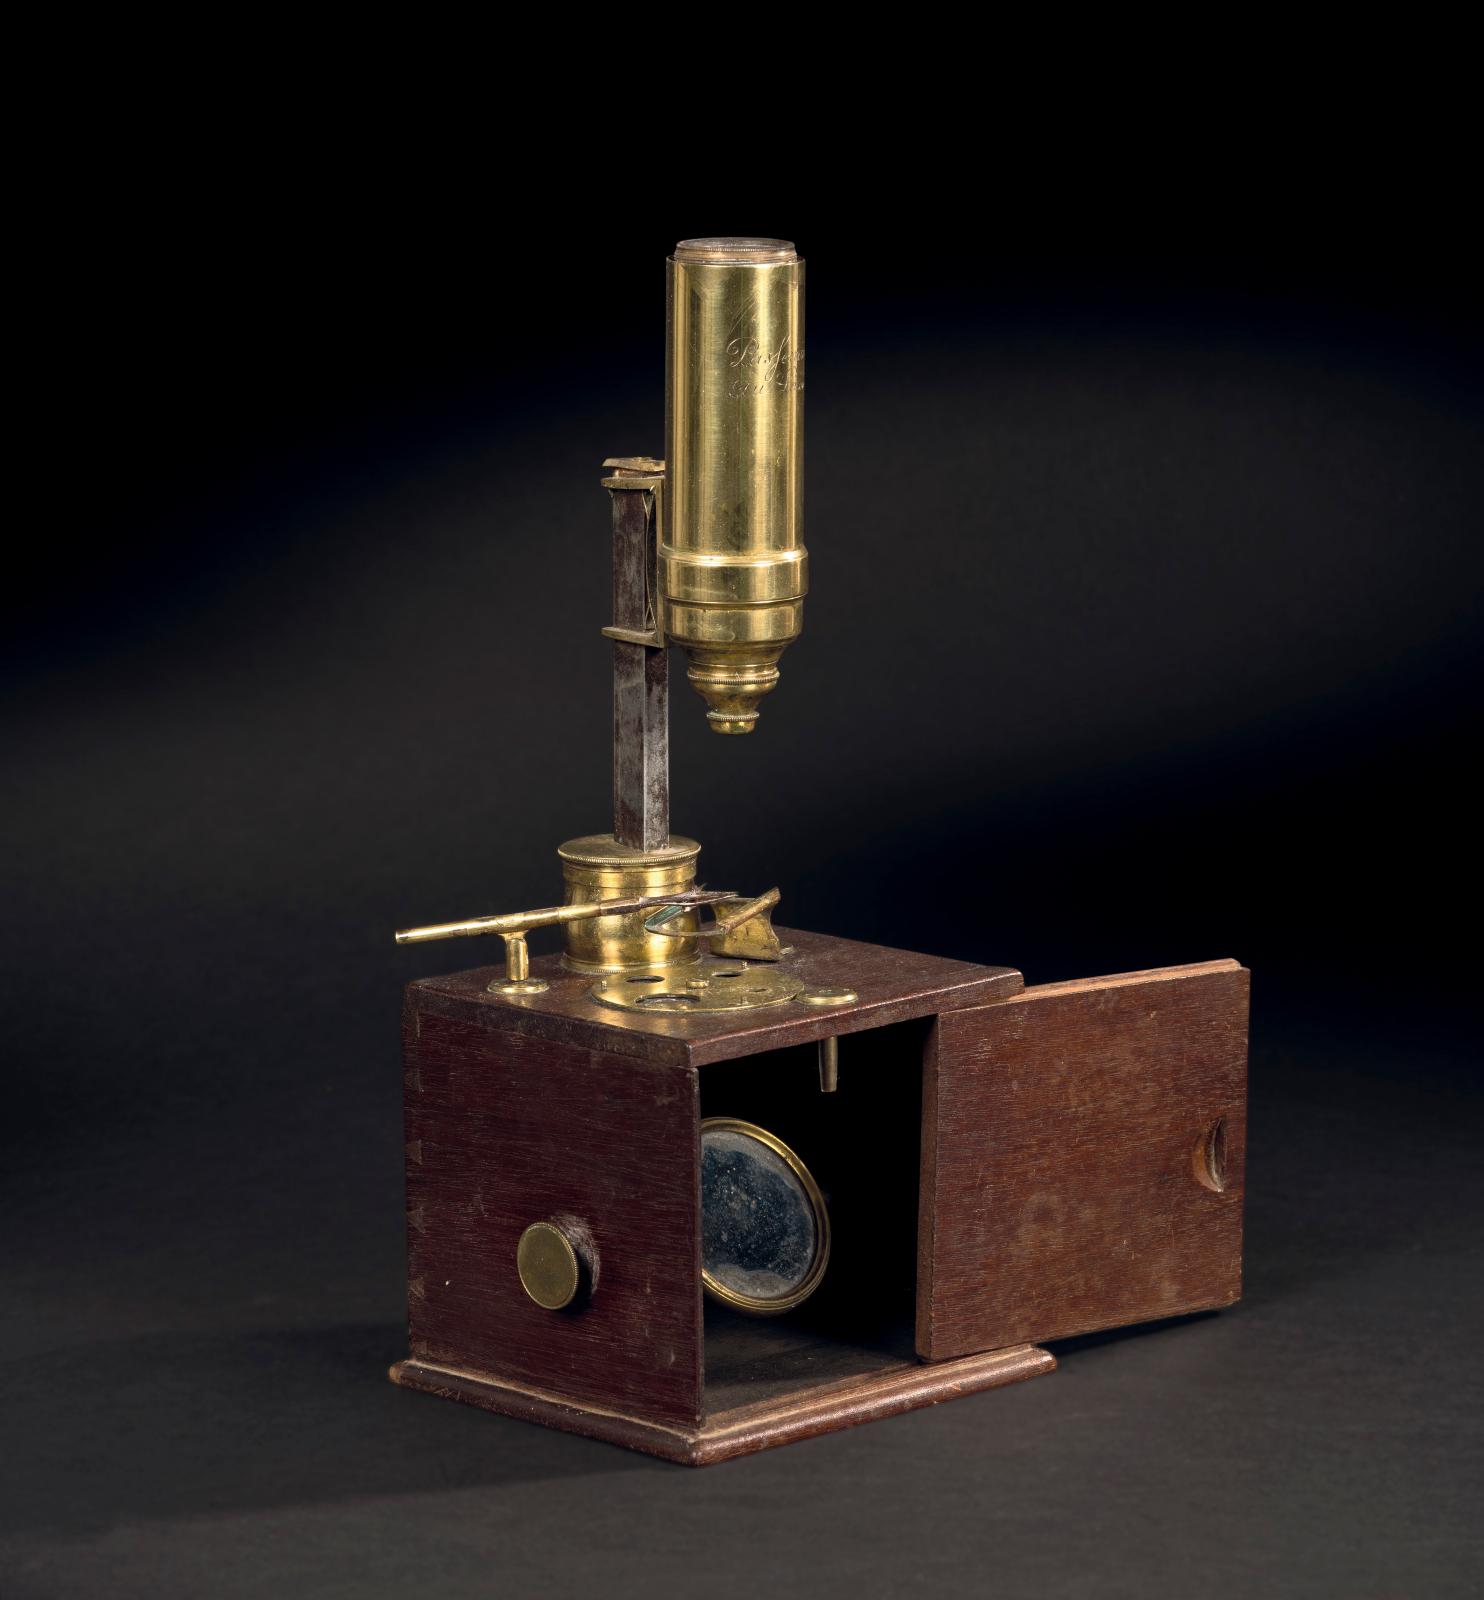 Un microscope attribué à Passemant 